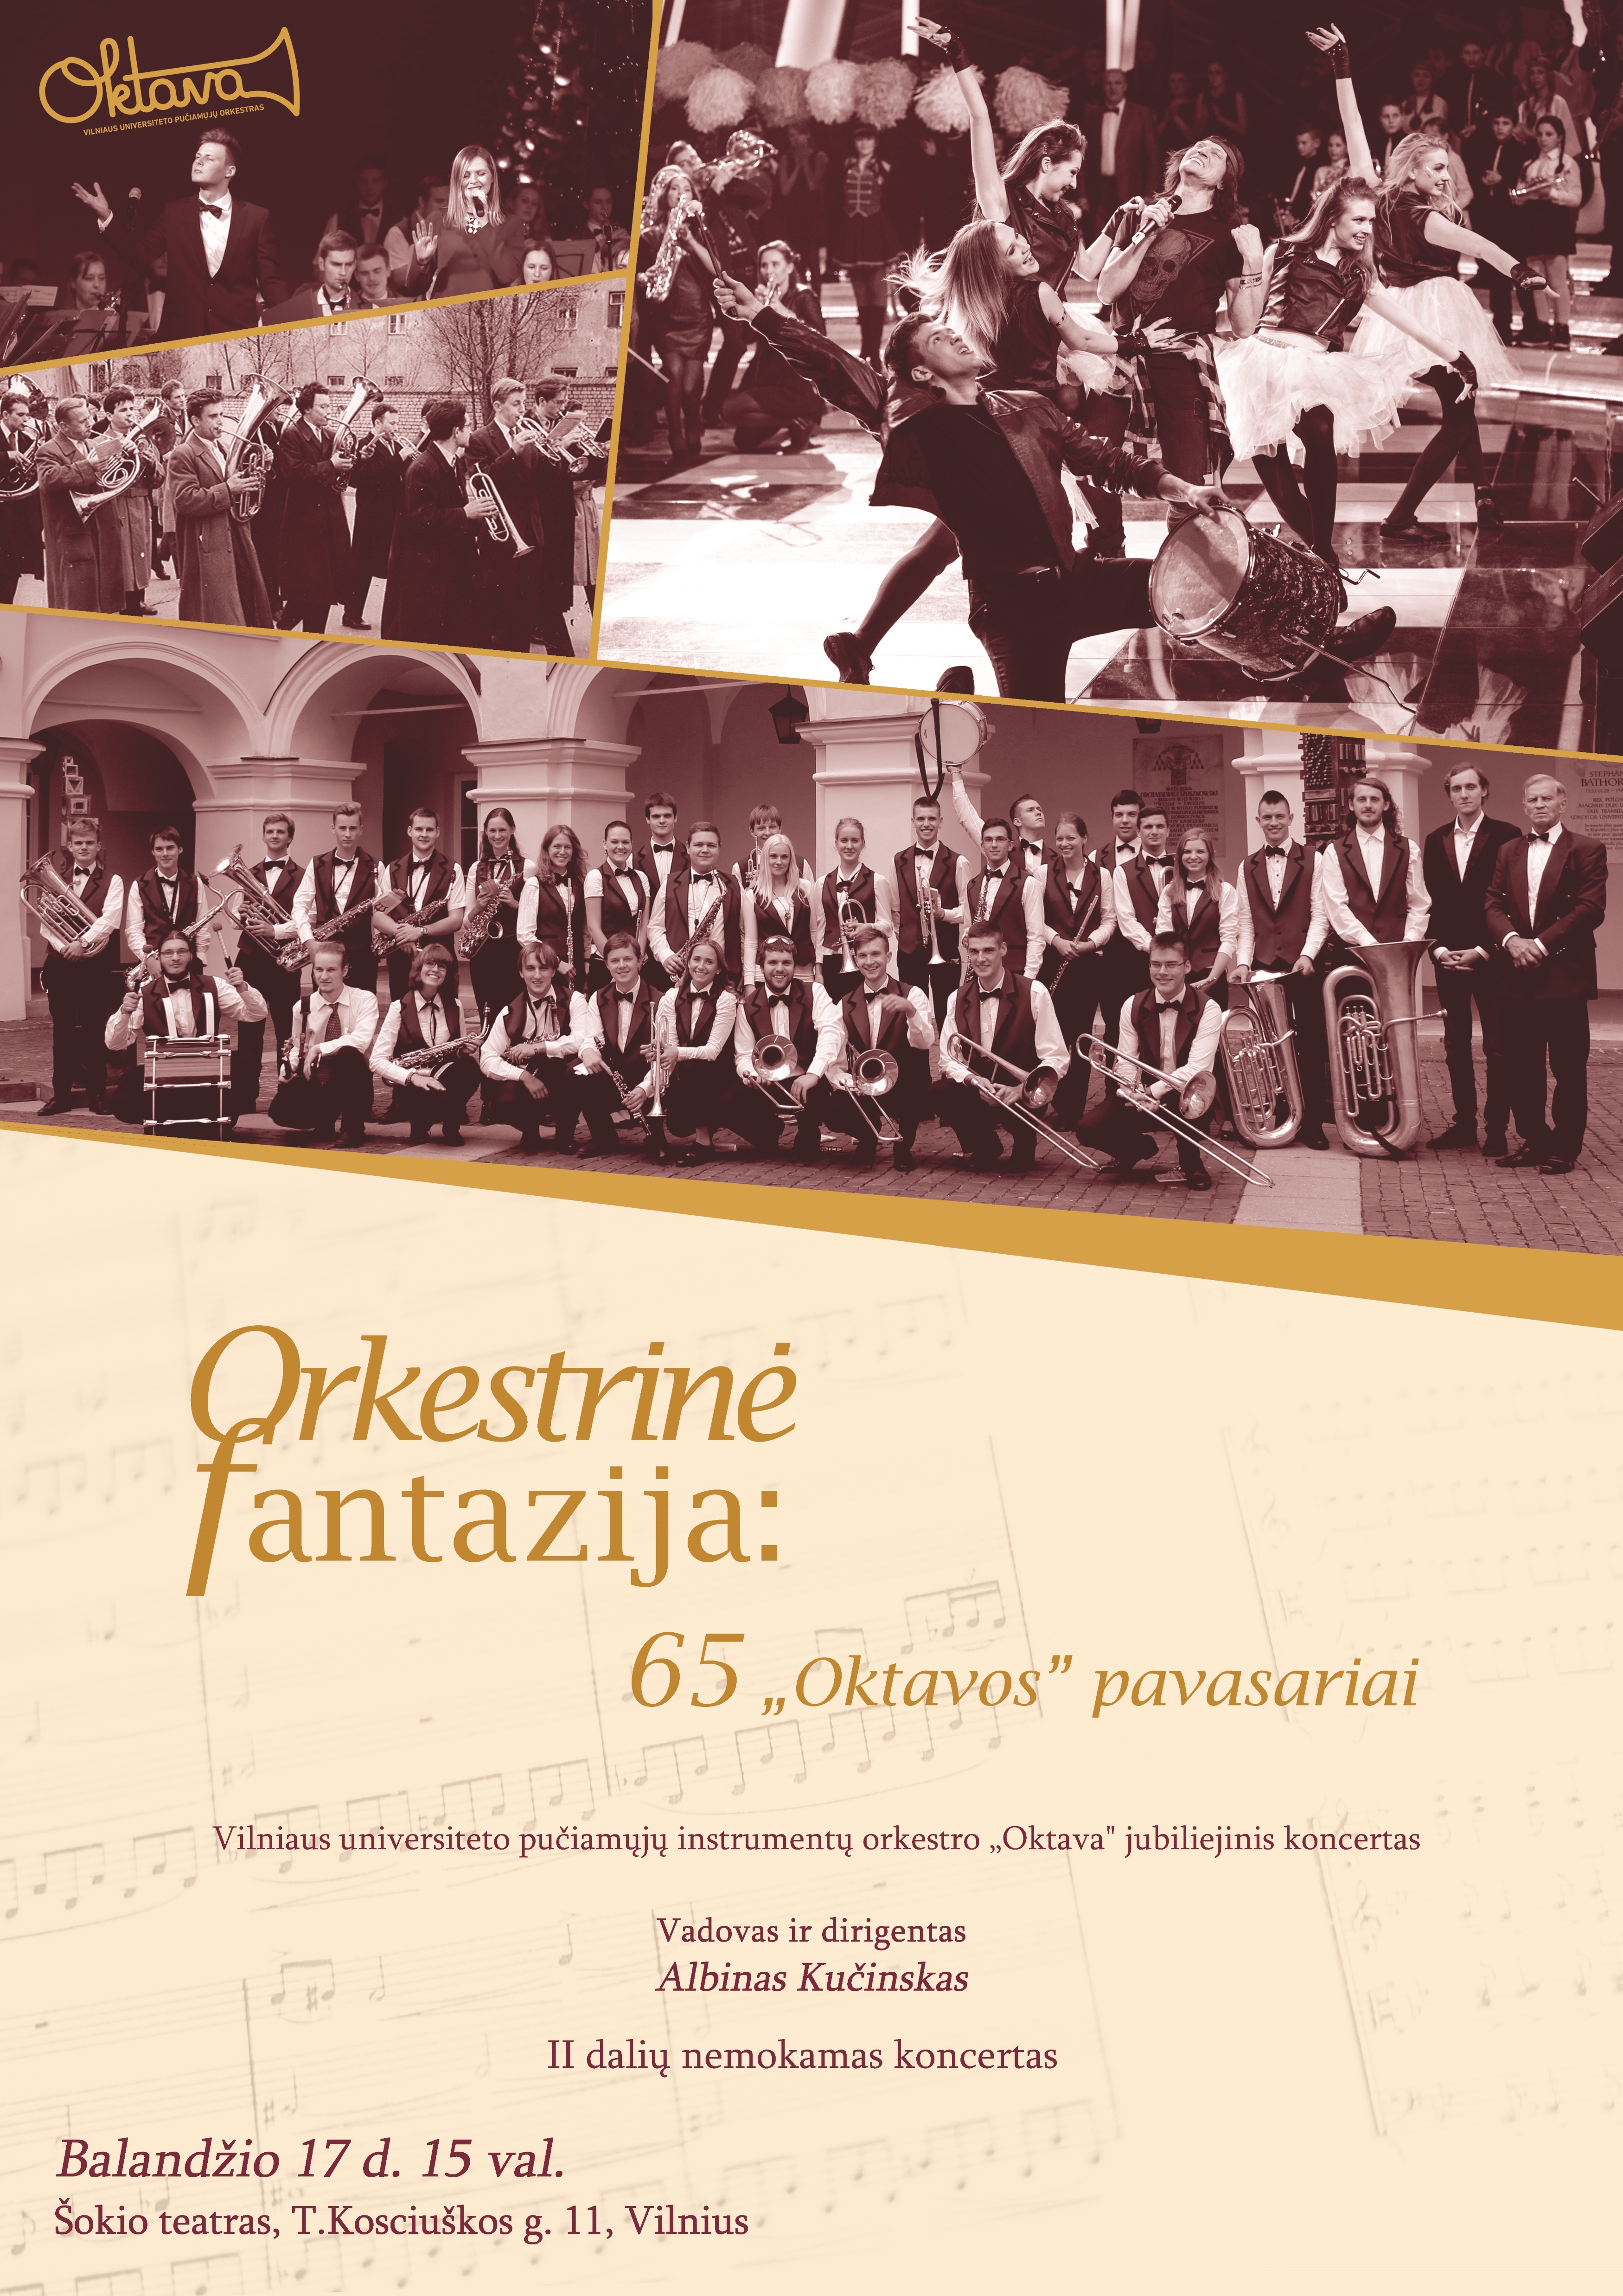 VU pučiamųjų instrumentų orkestro "Oktava" jubiliejinis koncertas. Balandžio 17 d. 15 val. Šokio teatras, T. Kosciuškos g. 11, Vilnius